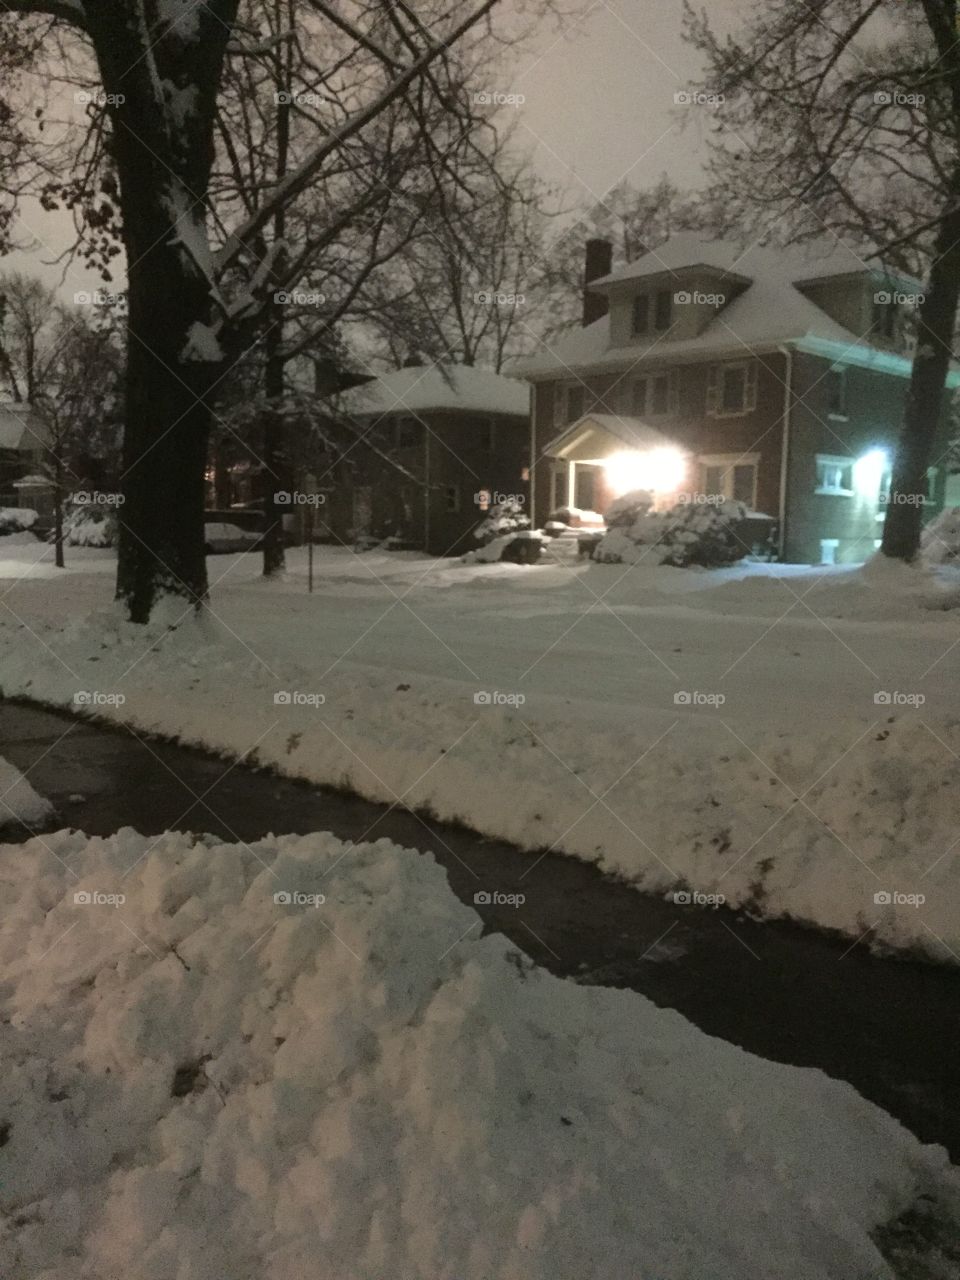 Neighborhood winter morning